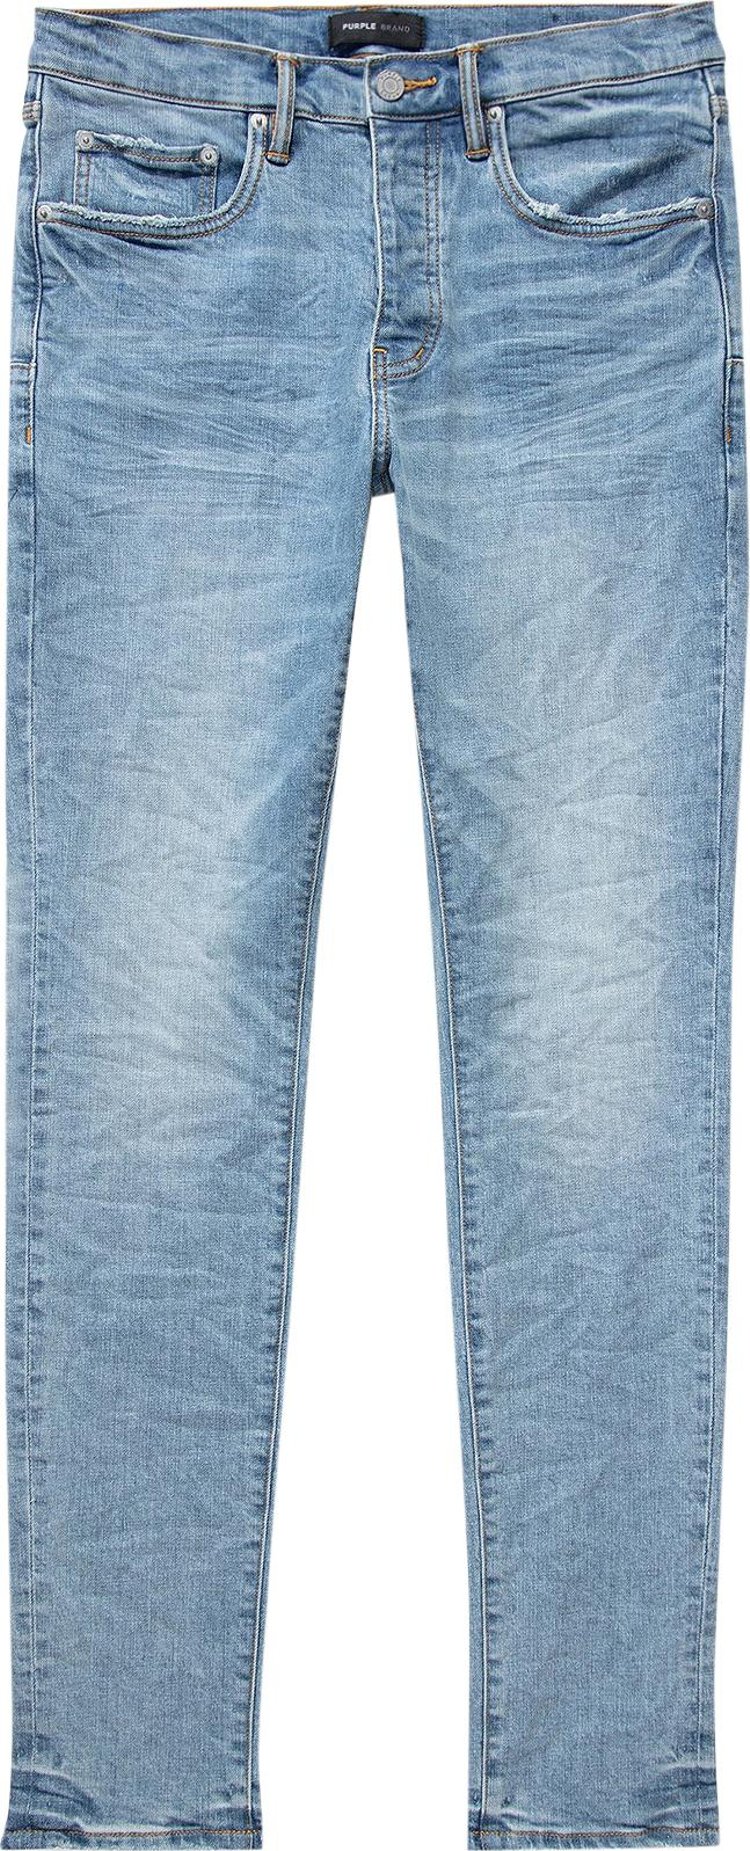 PURPLE BRAND Jeans Men, White skinny jeans White